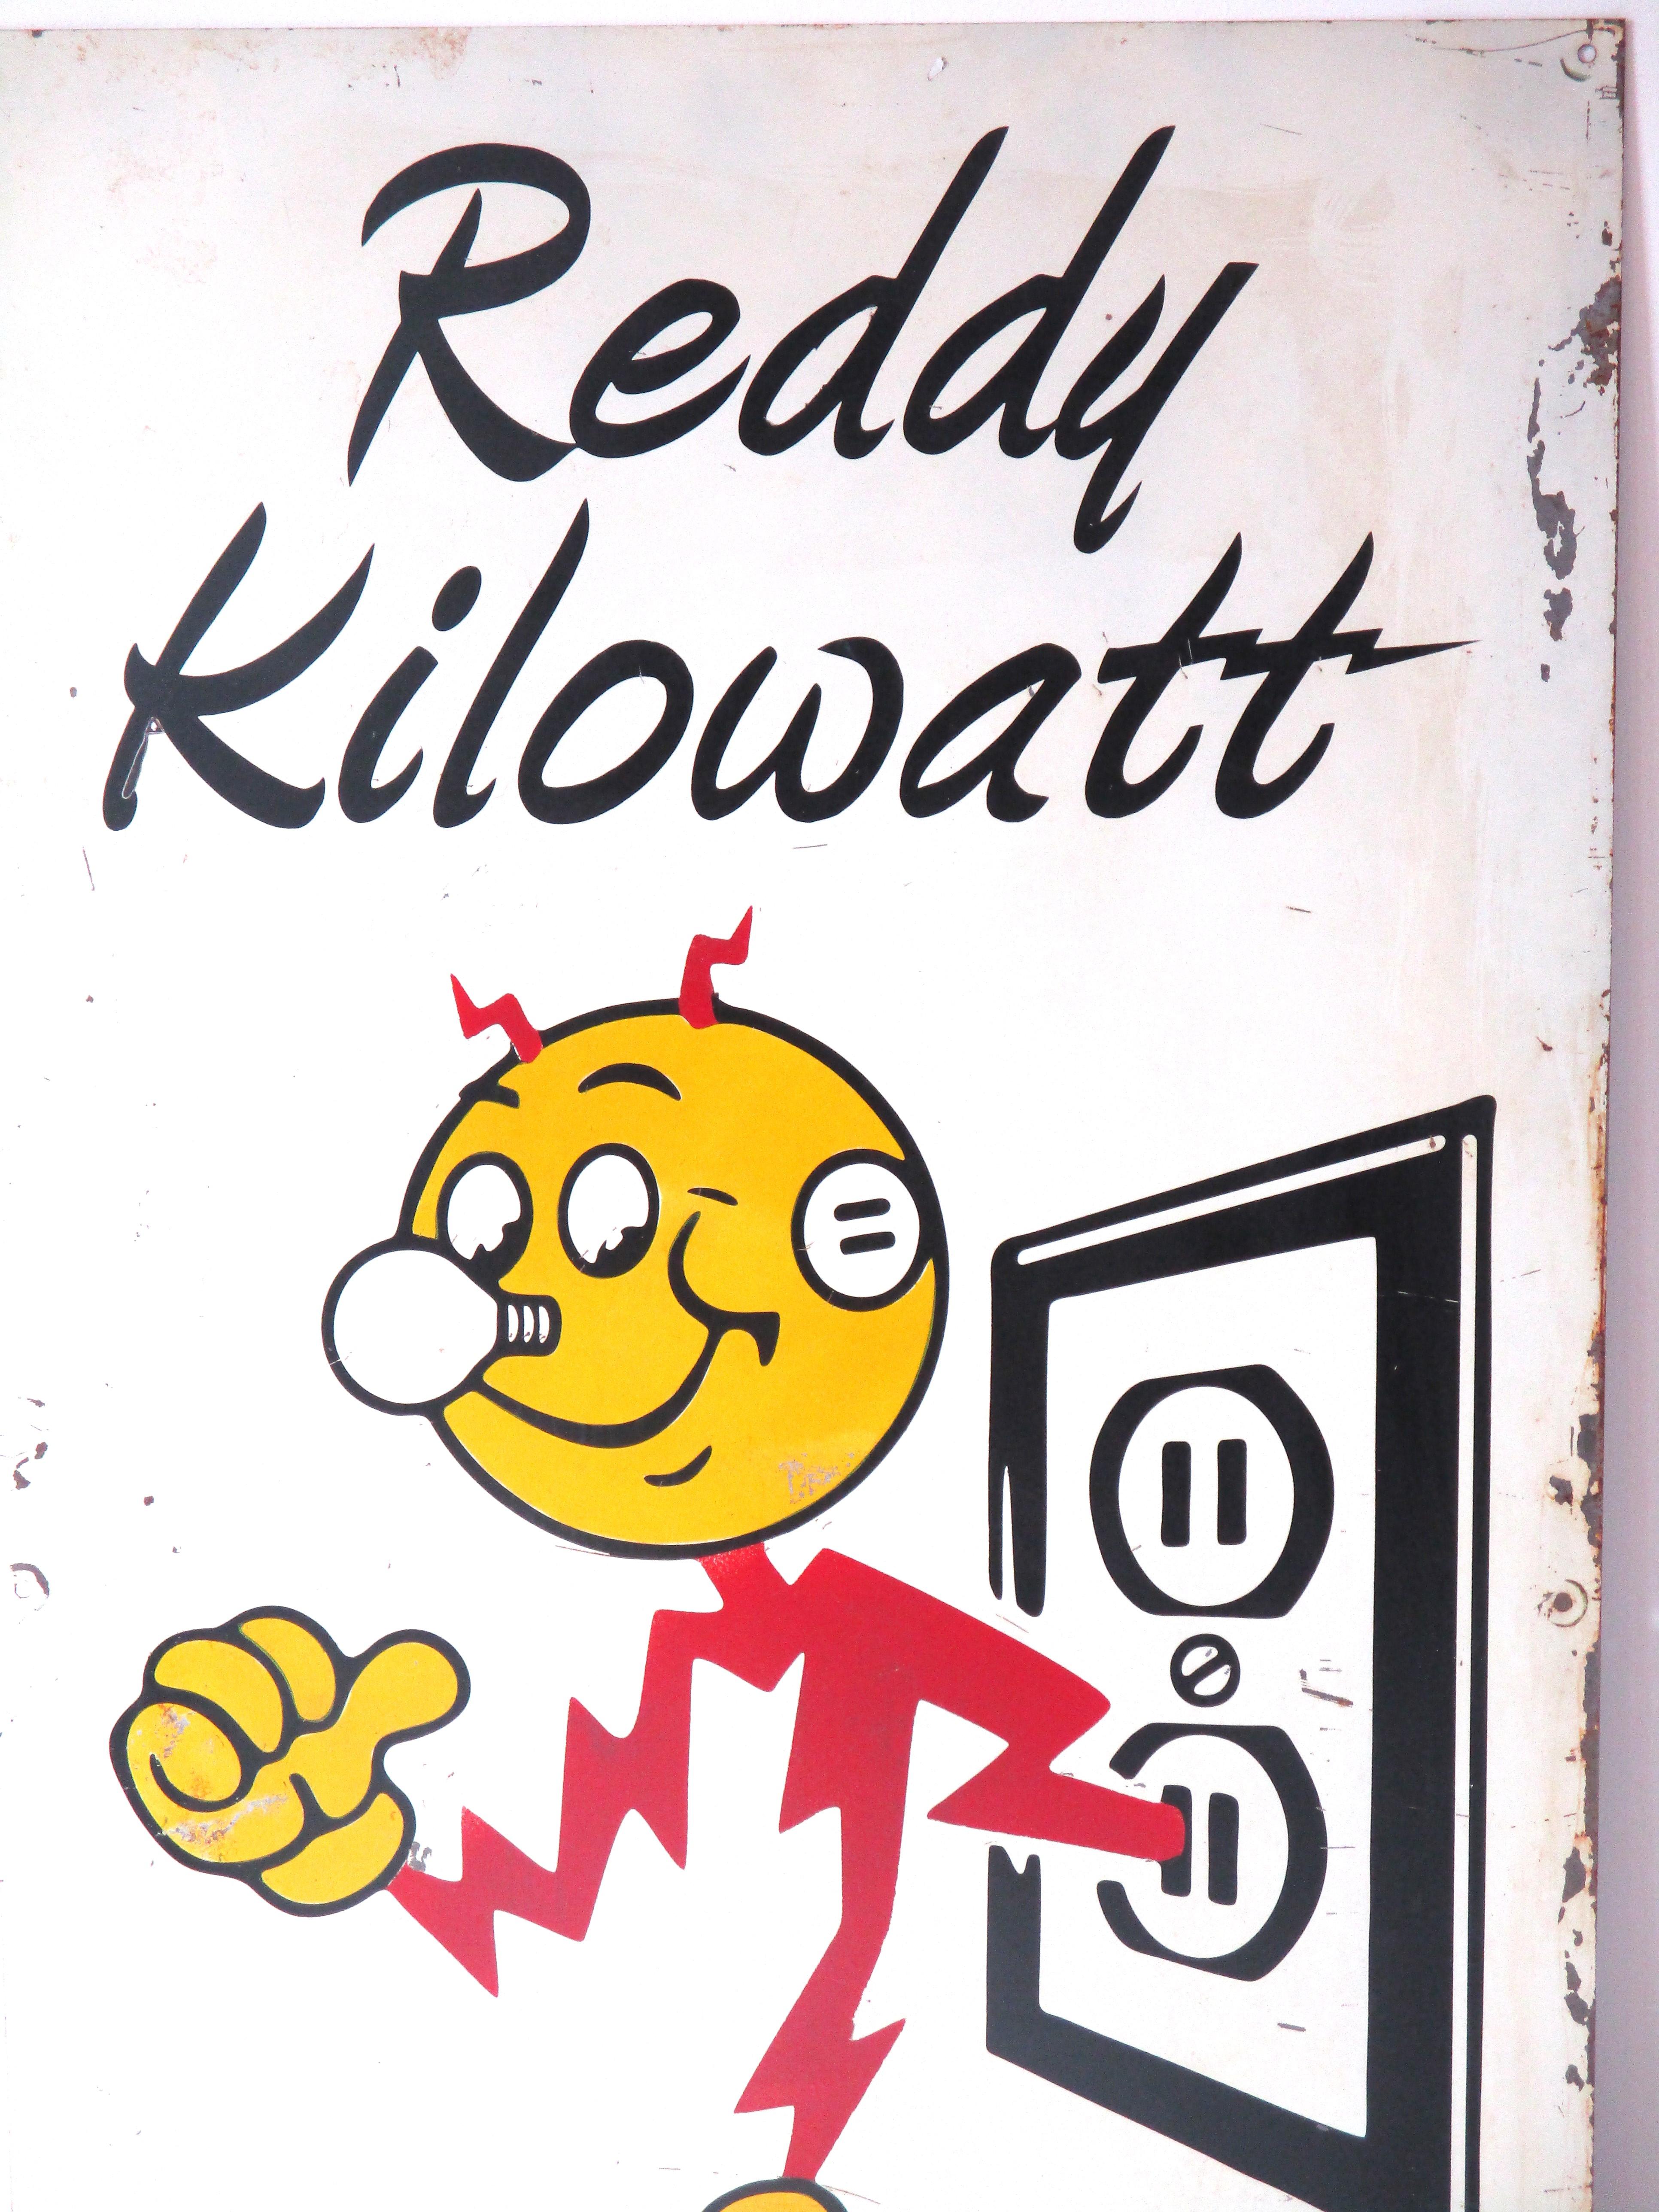 reddy kilowatt sign